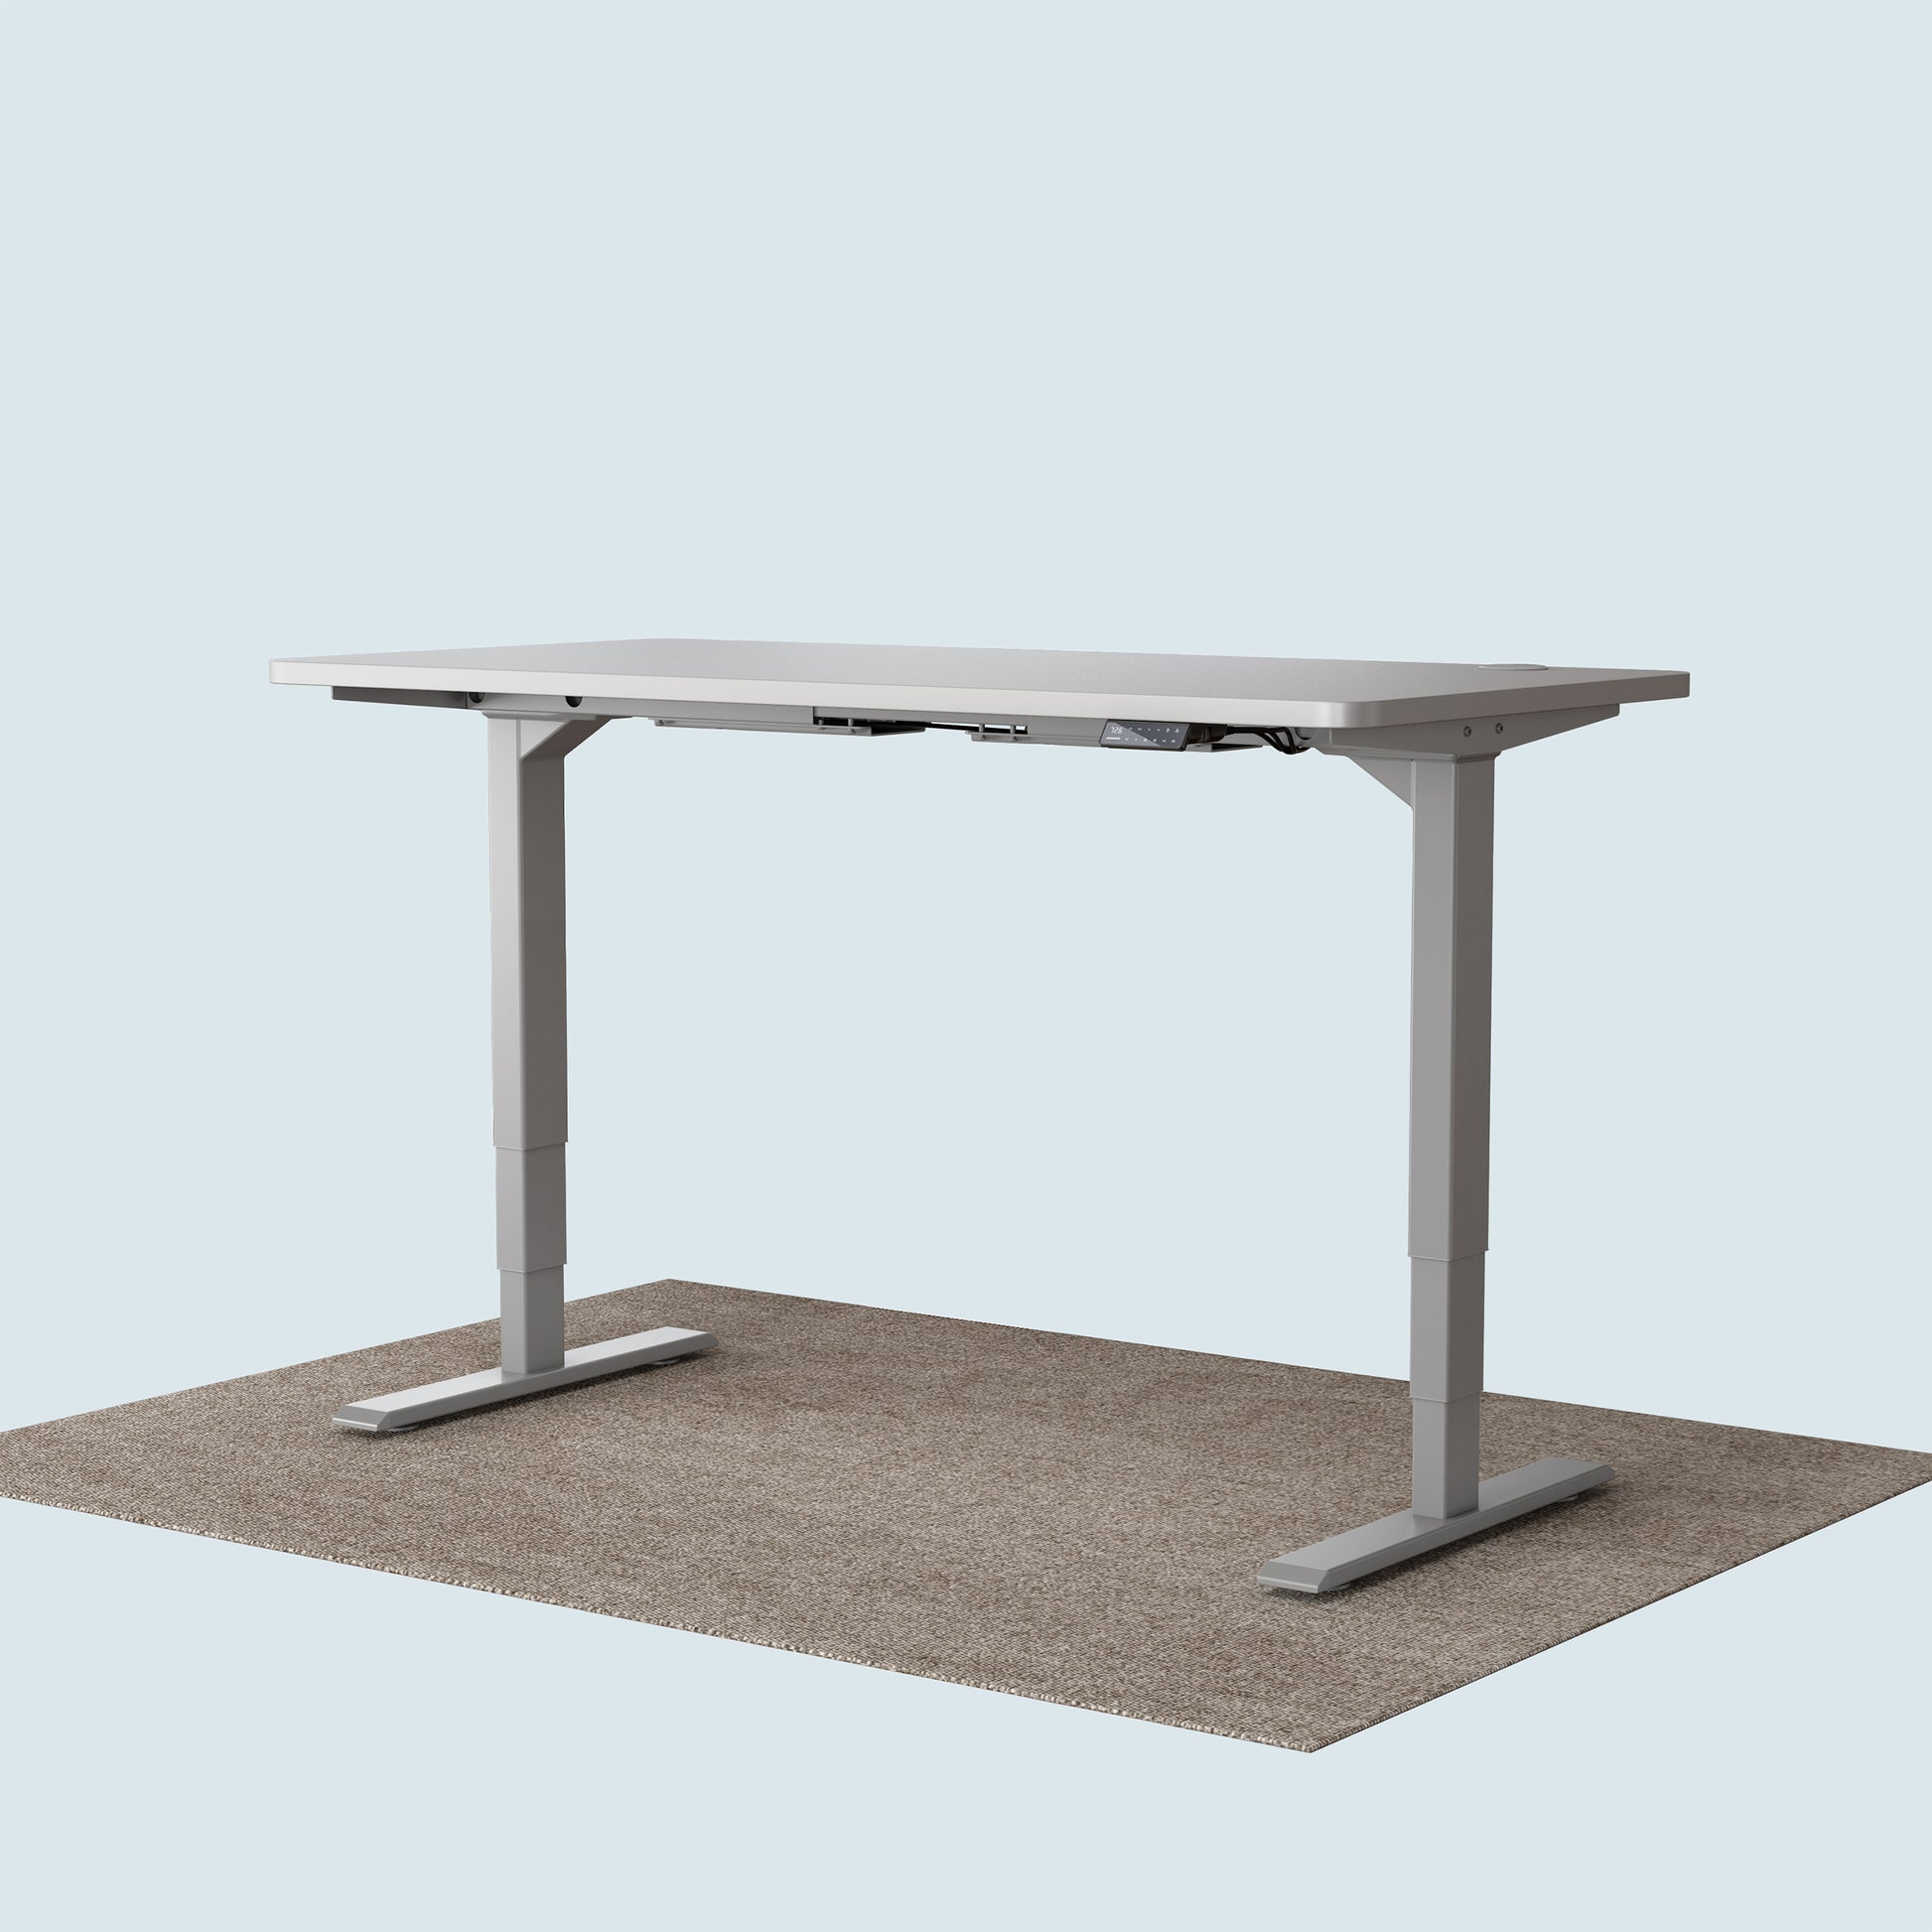 T2 Pro Plus height adjustable desk grey frame and 140x70cm white desktop